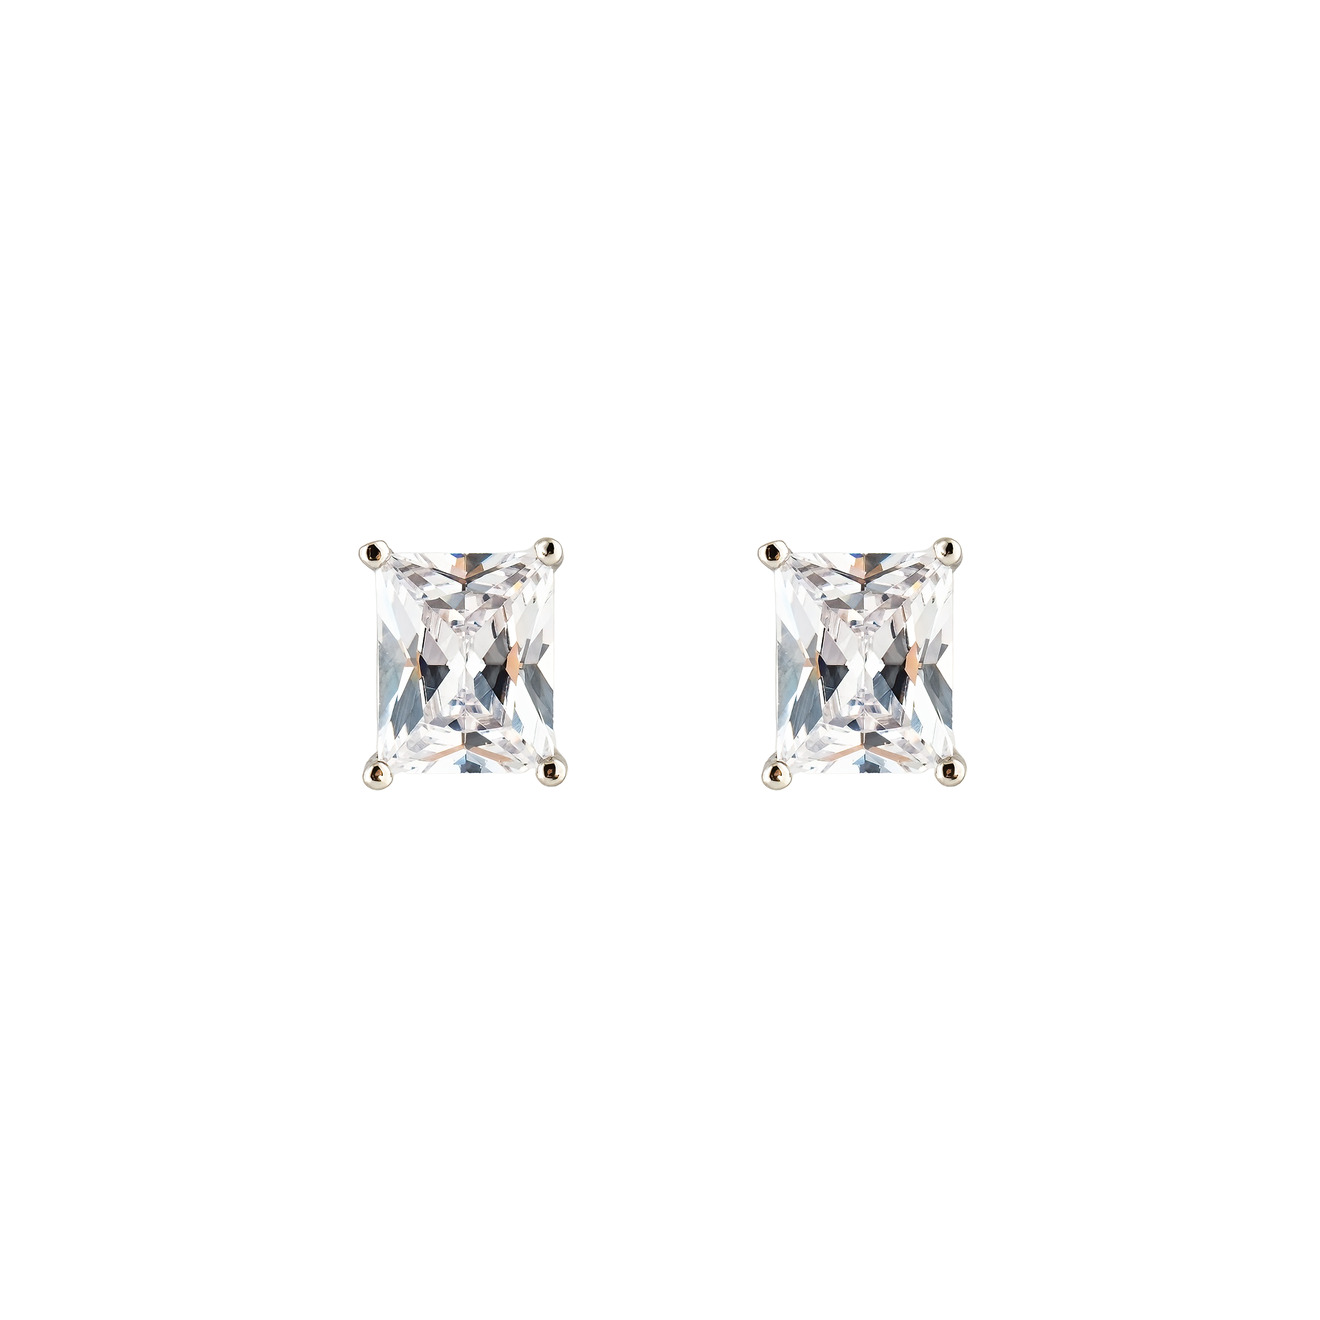 Herald Percy Серебристые серьги-пусеты с белым кристаллом herald percy круглые серебристые серьги с крупным кристаллом